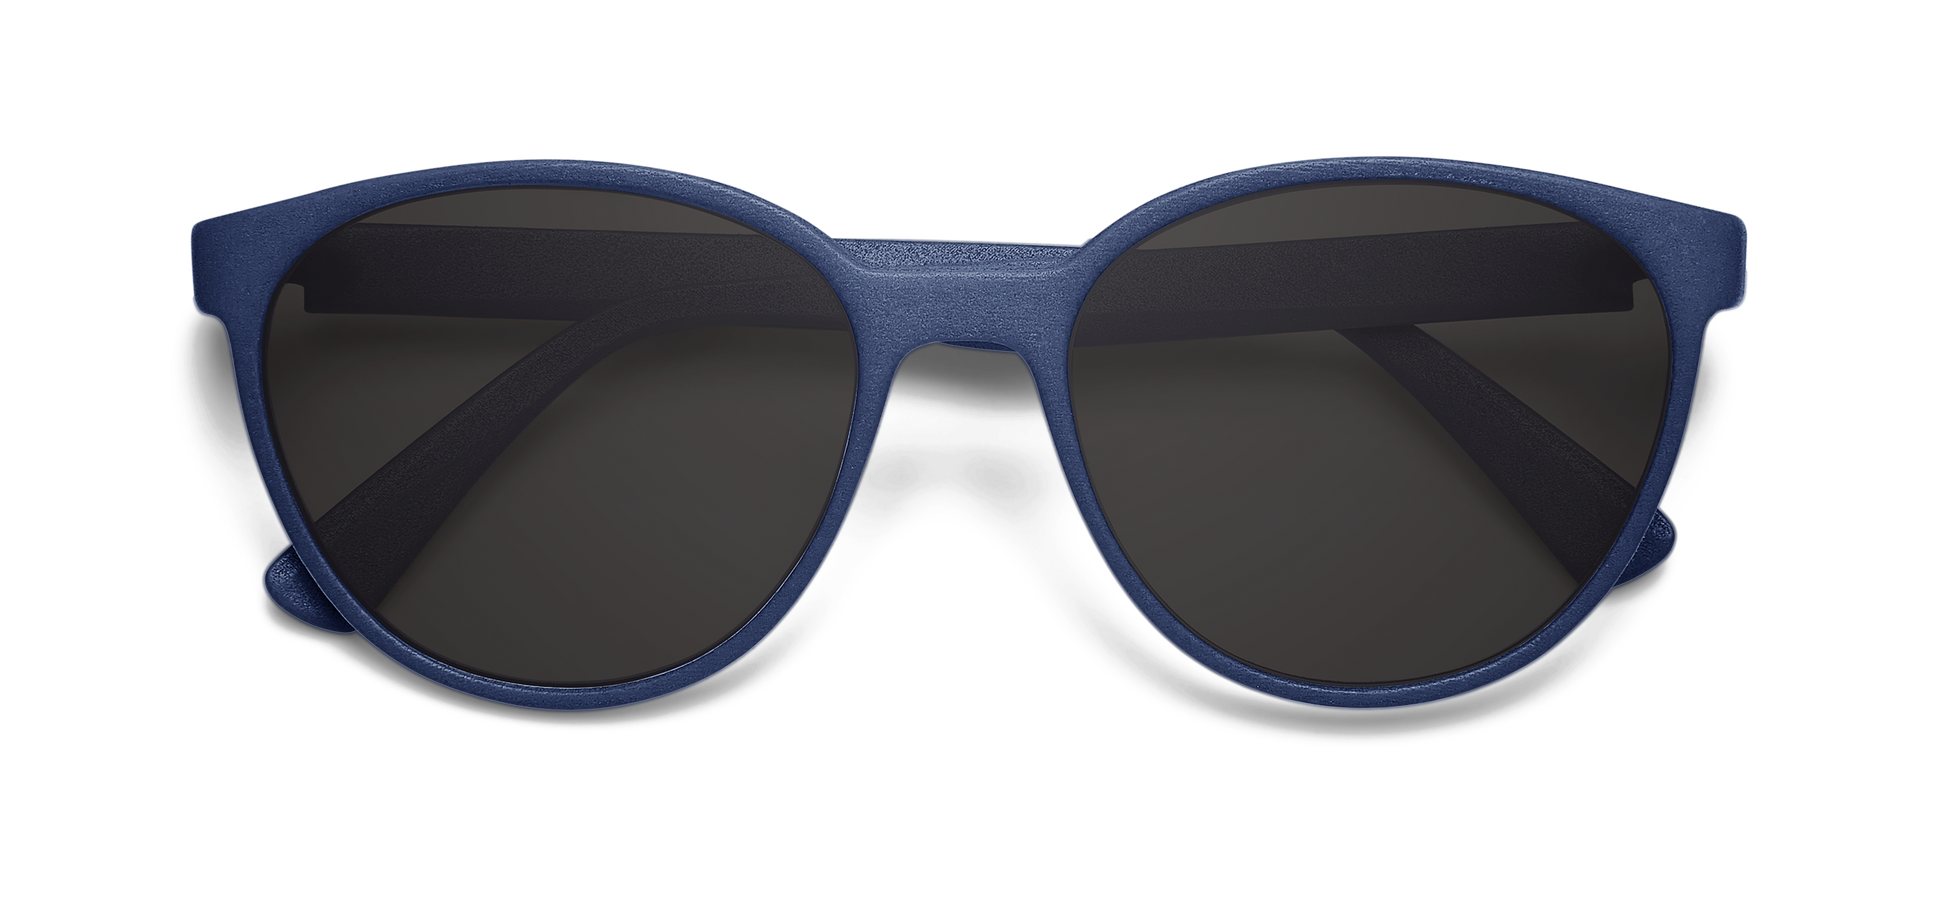 What's New  Eyeglass Frames, Contact Lenses, Sunglasses Wainwright